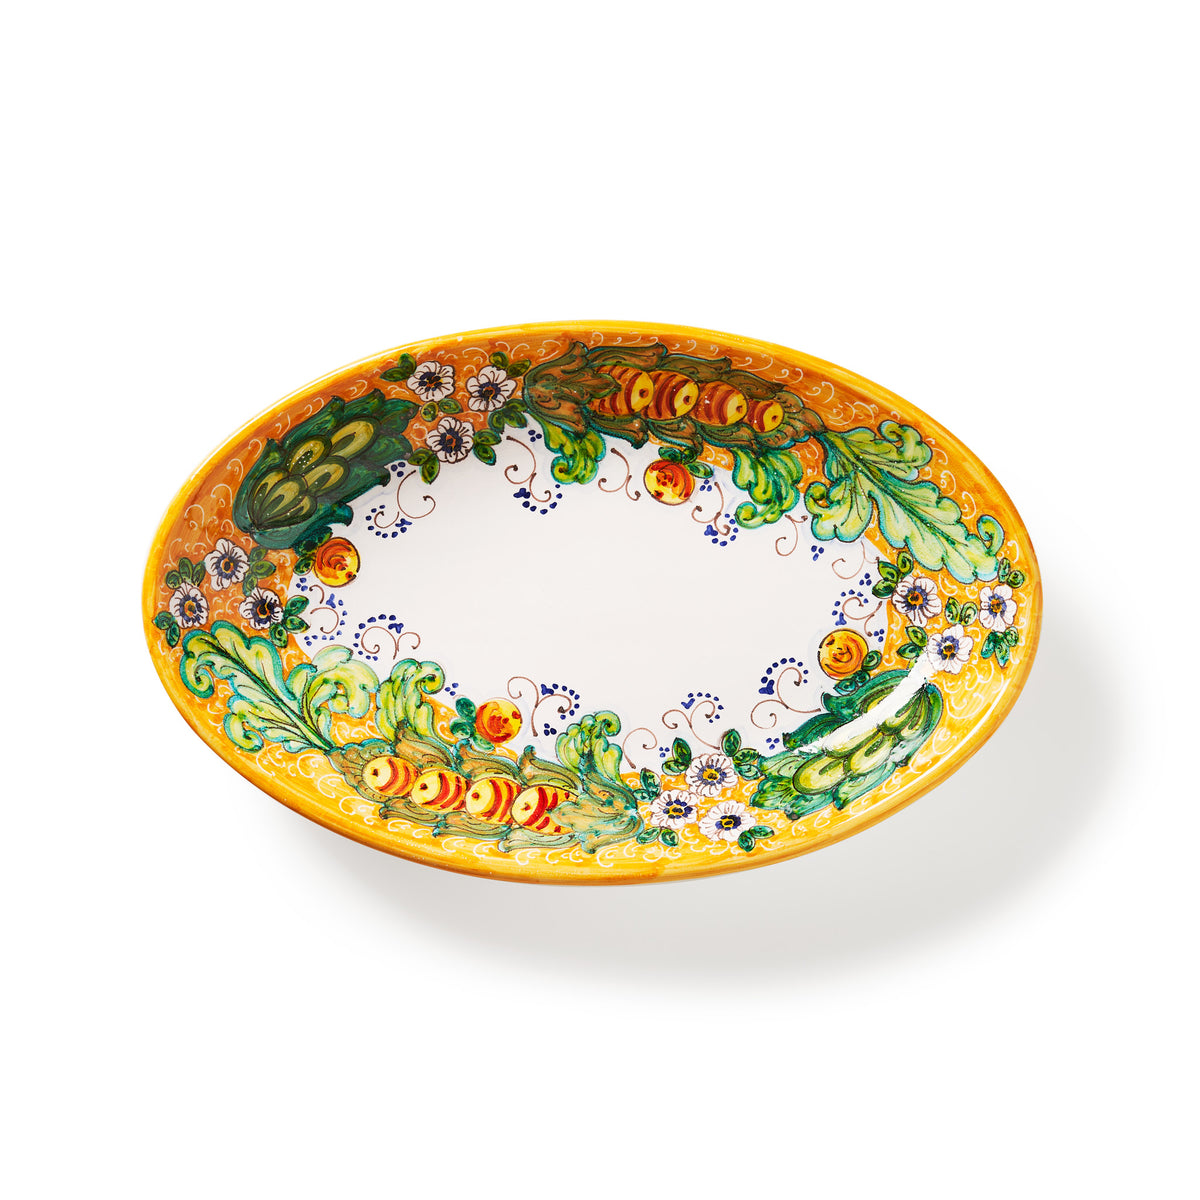 sbigoli-ceramics-pottery-large-oval-platter-bacche